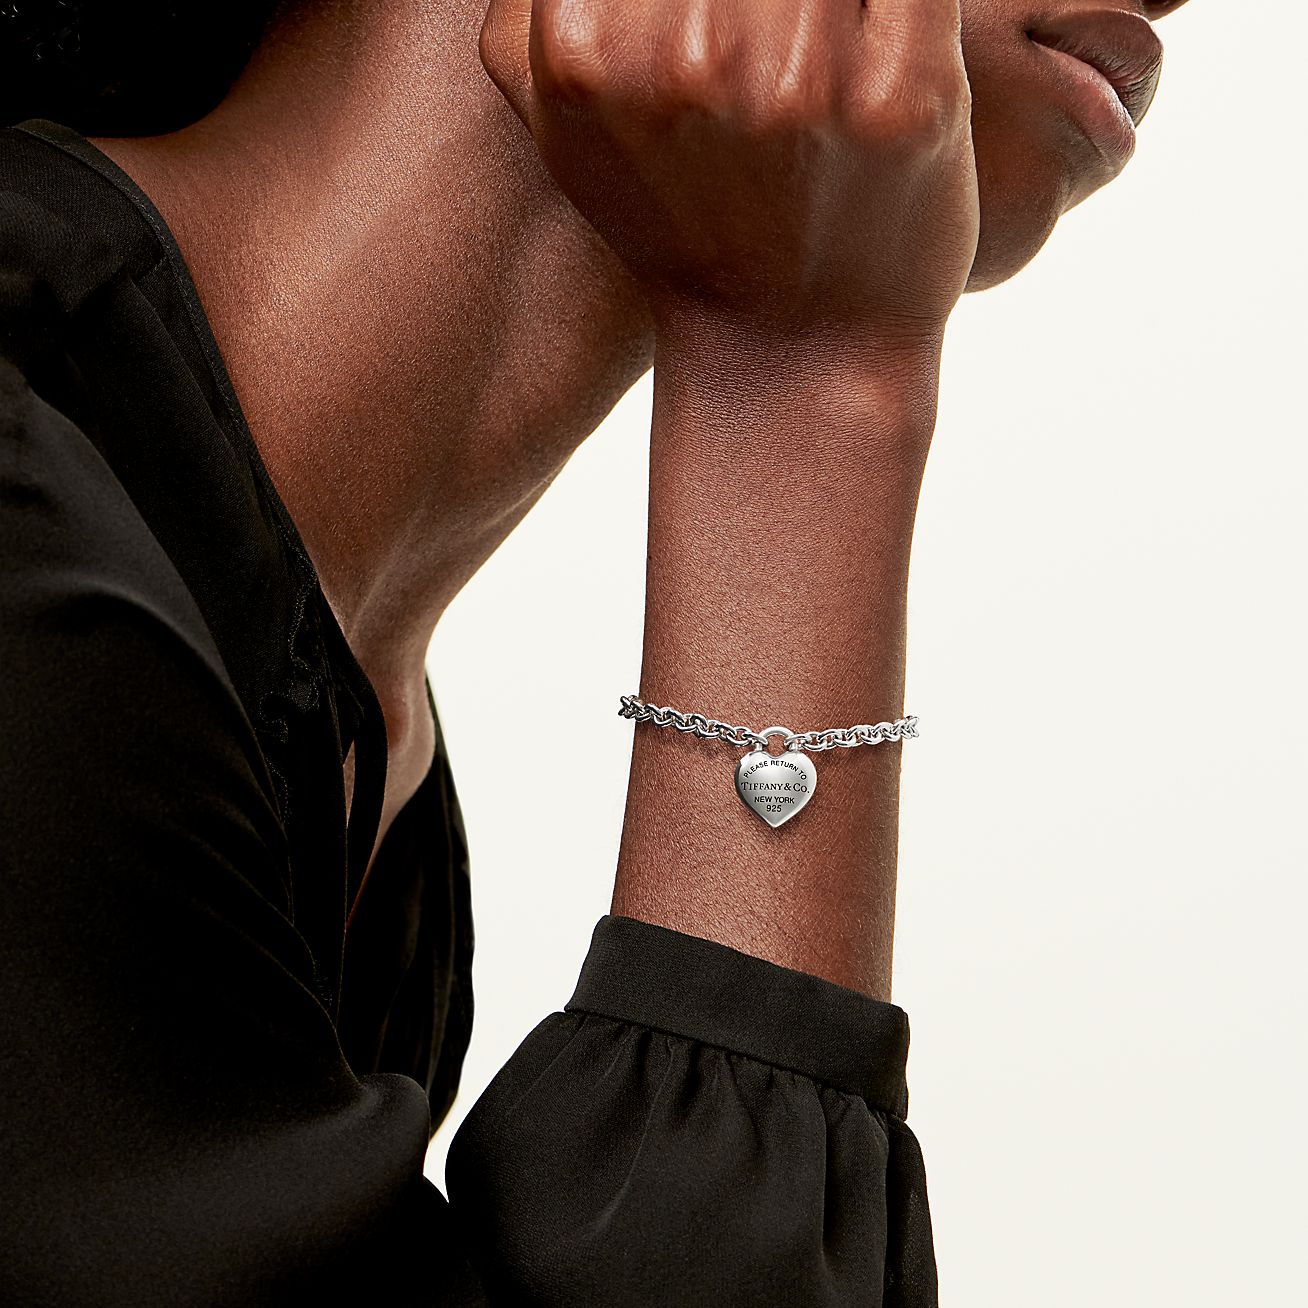 Tiffany & Co Toggle Bracelet 8.25 Heart Shopping Bag Charm